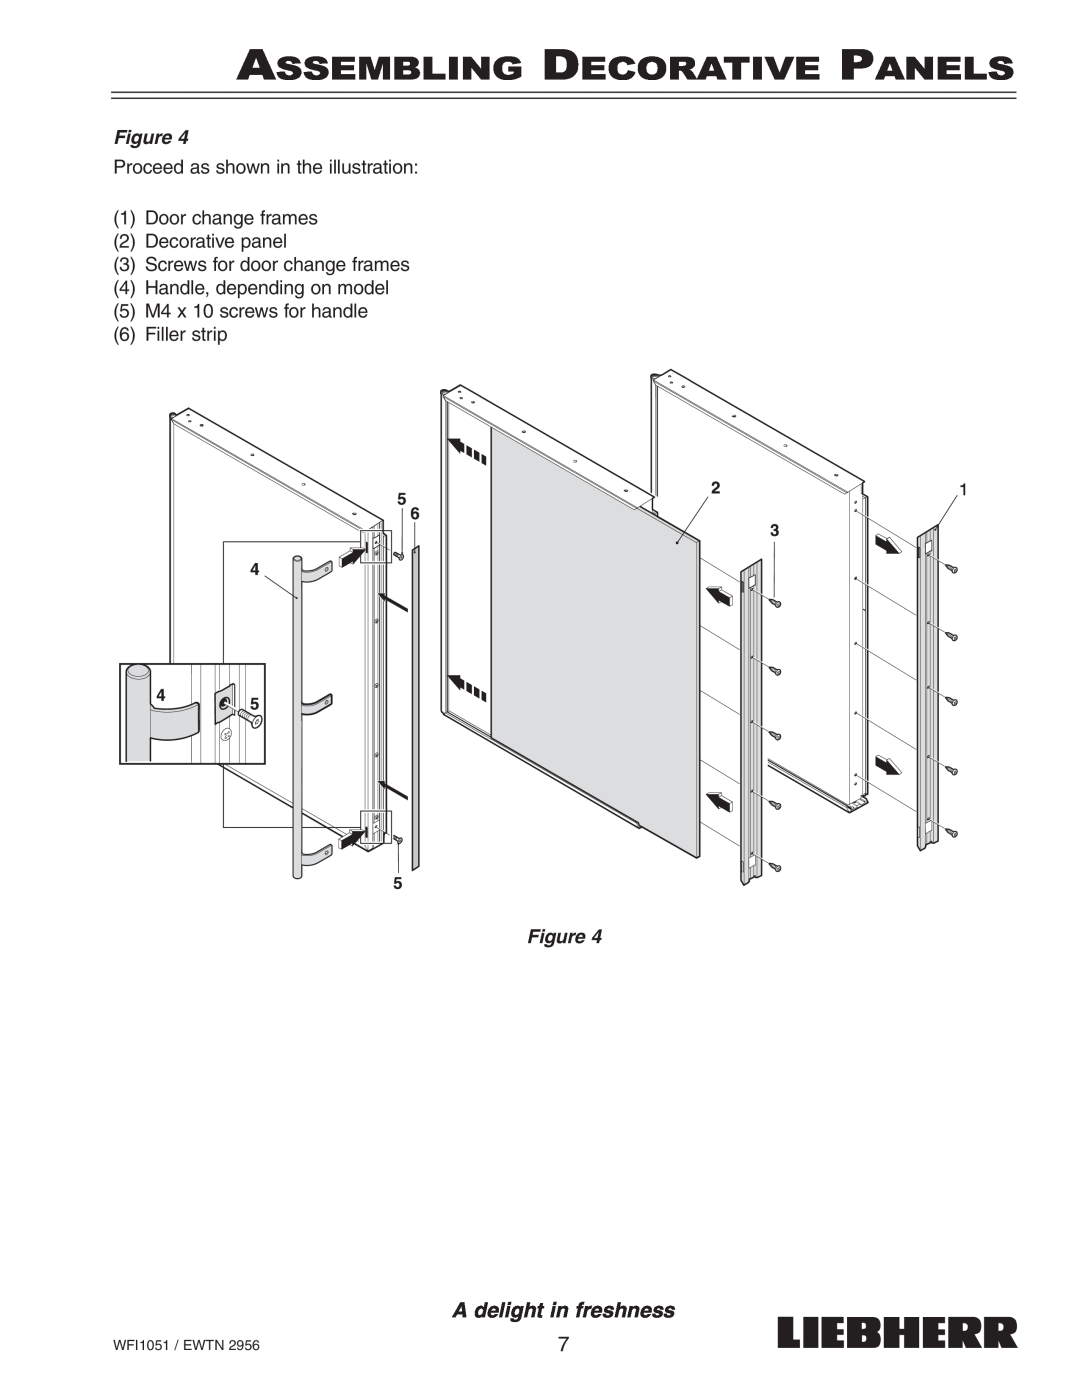 Liebherr installation instructions Assembling Decorative Panels, A delight in freshness, WFI1051 / EWTN 